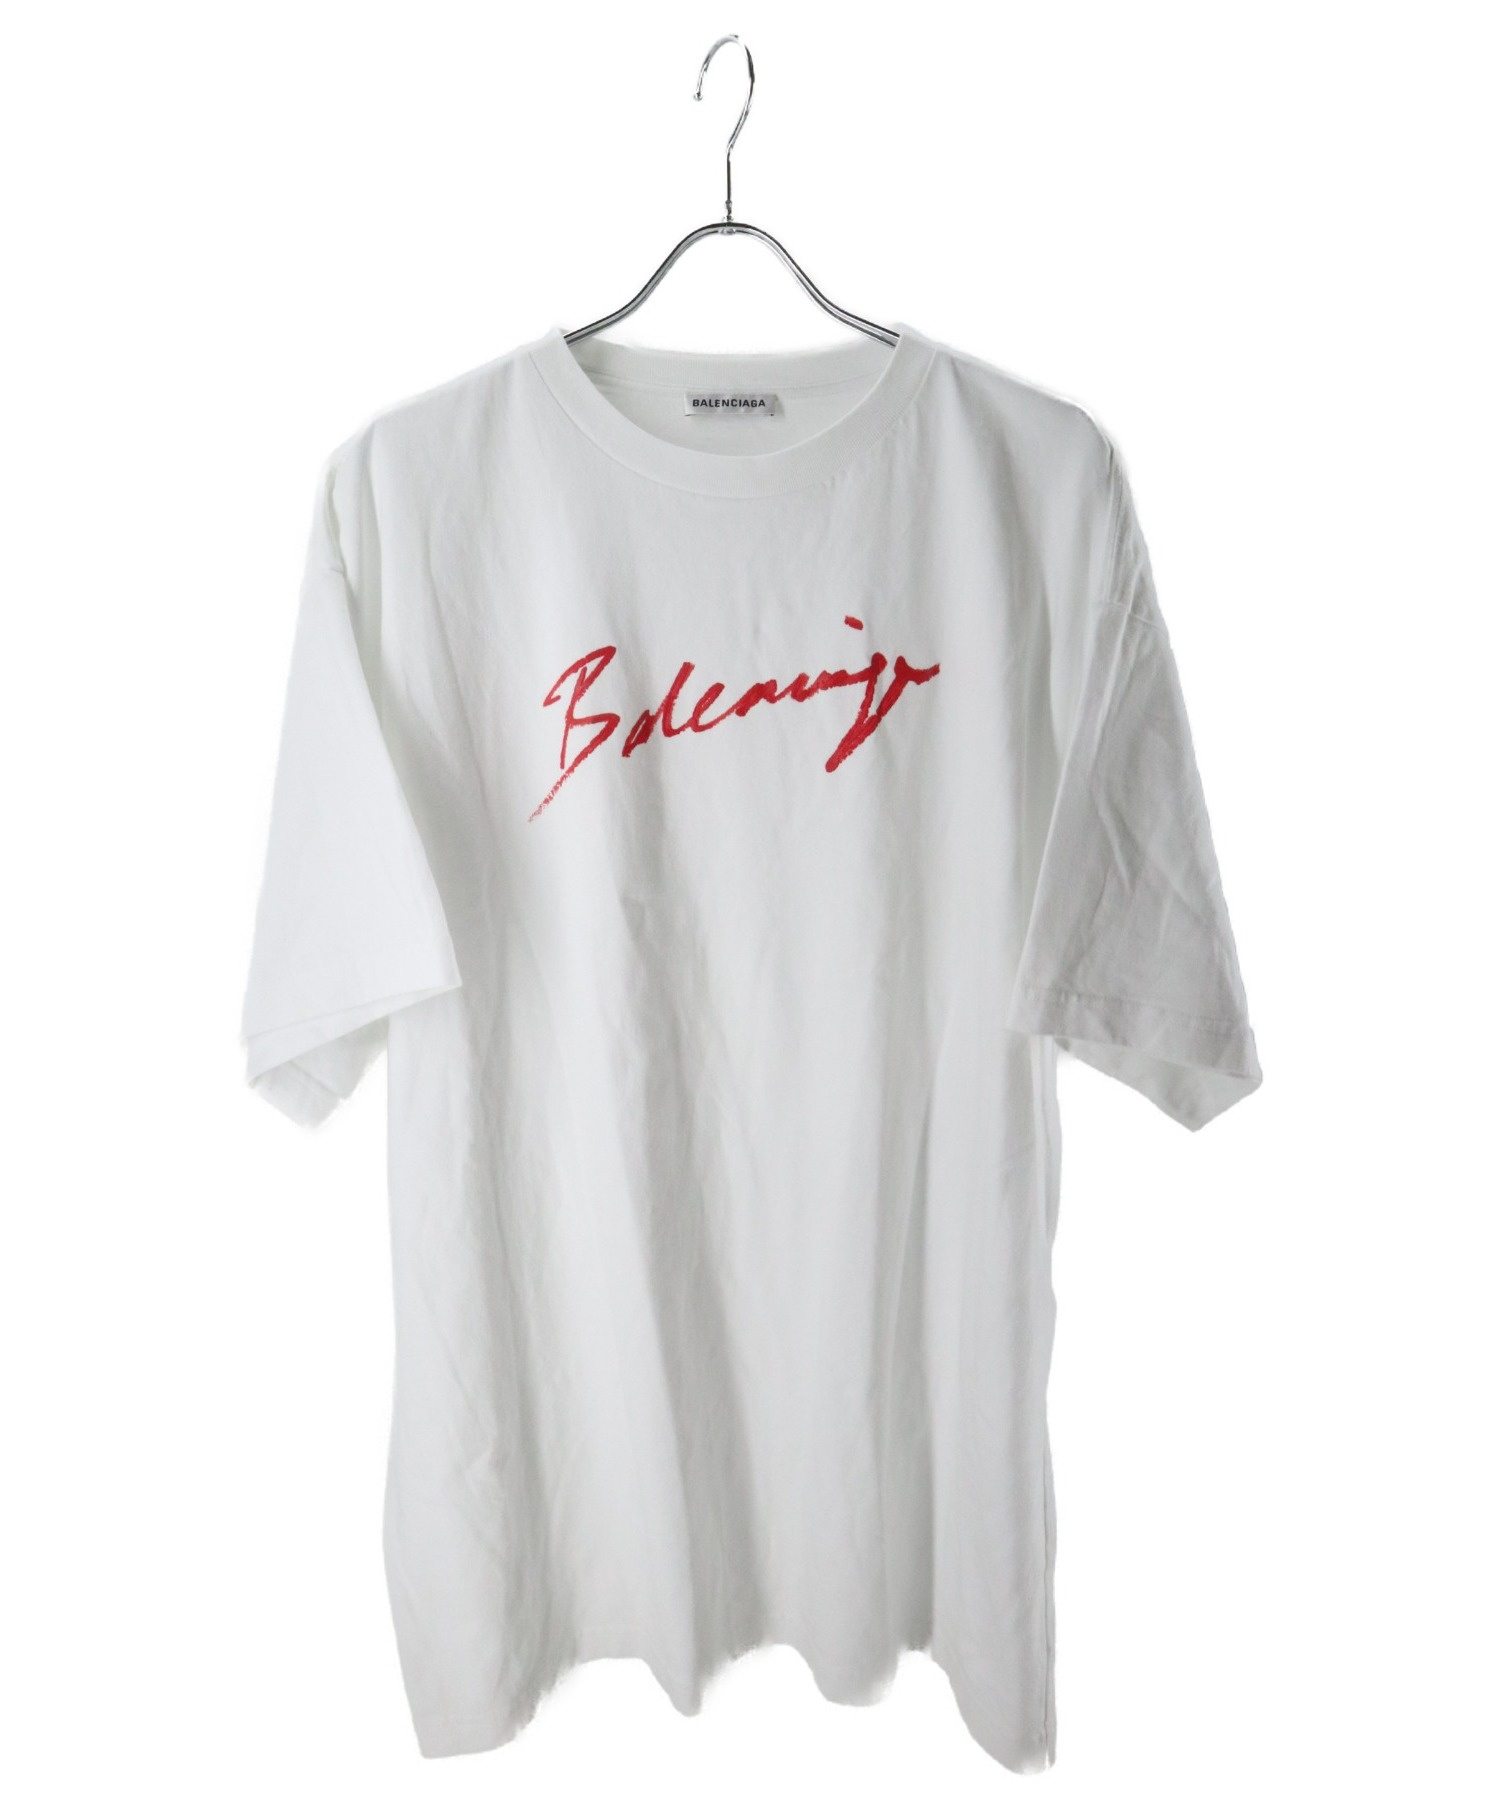 BALENCIAGA (バレンシアガ) シグネチャークロップドロゴTシャツ ホワイト サイズ:XS